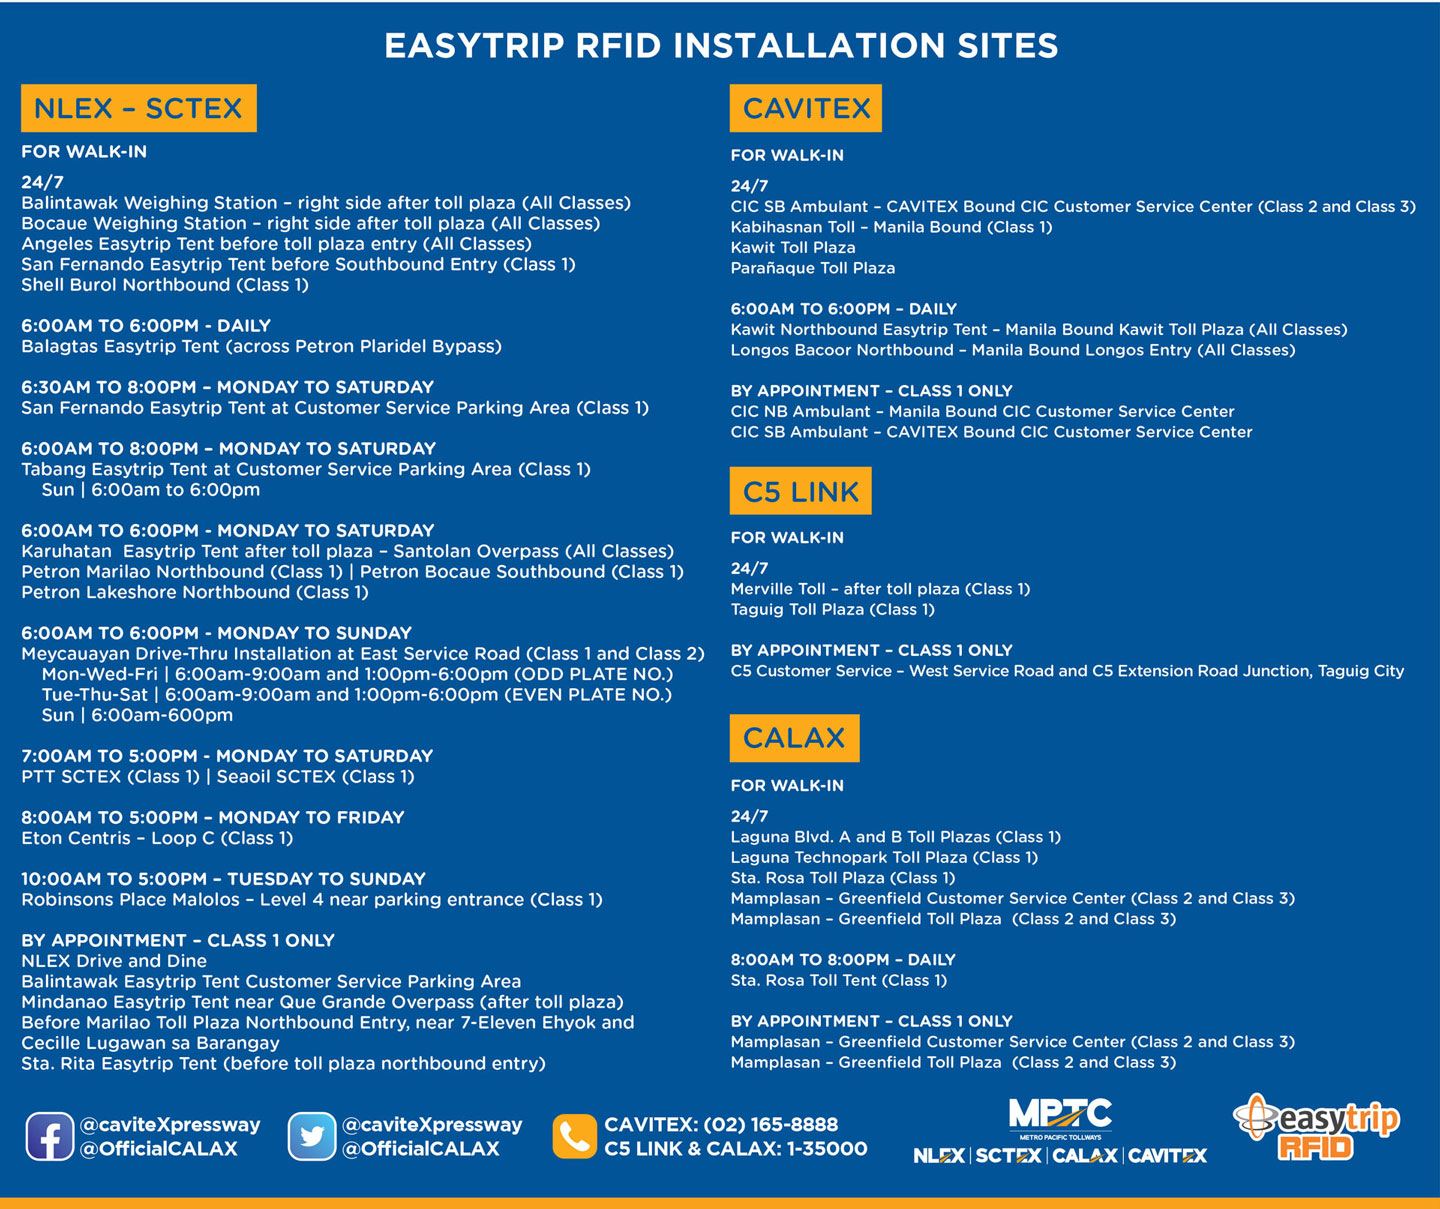 List of Easytrip RFID Installation Sites